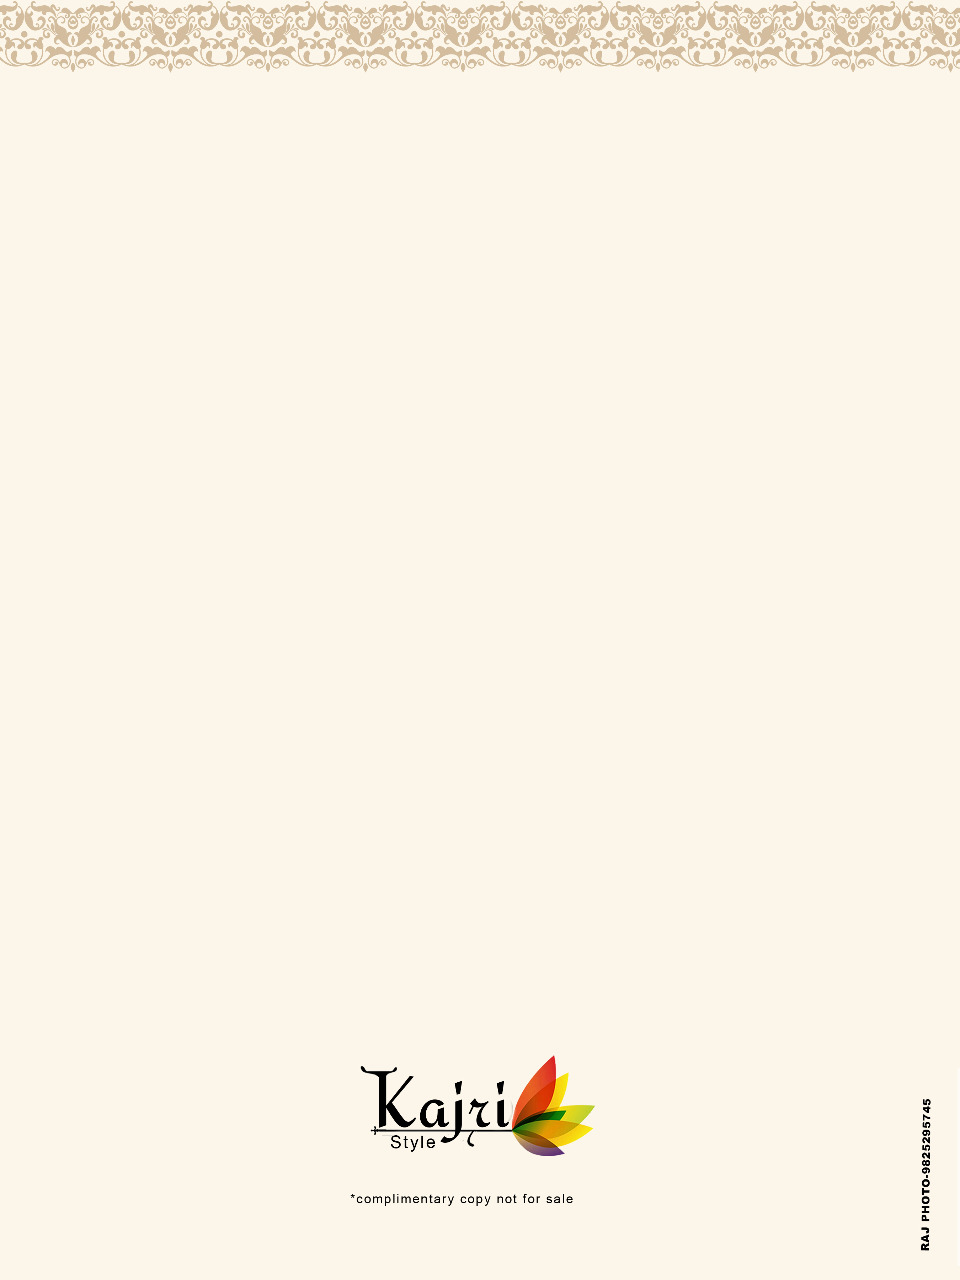 Kajri style presents ziaa vol 1 exclusive fancy collection Of kurtis